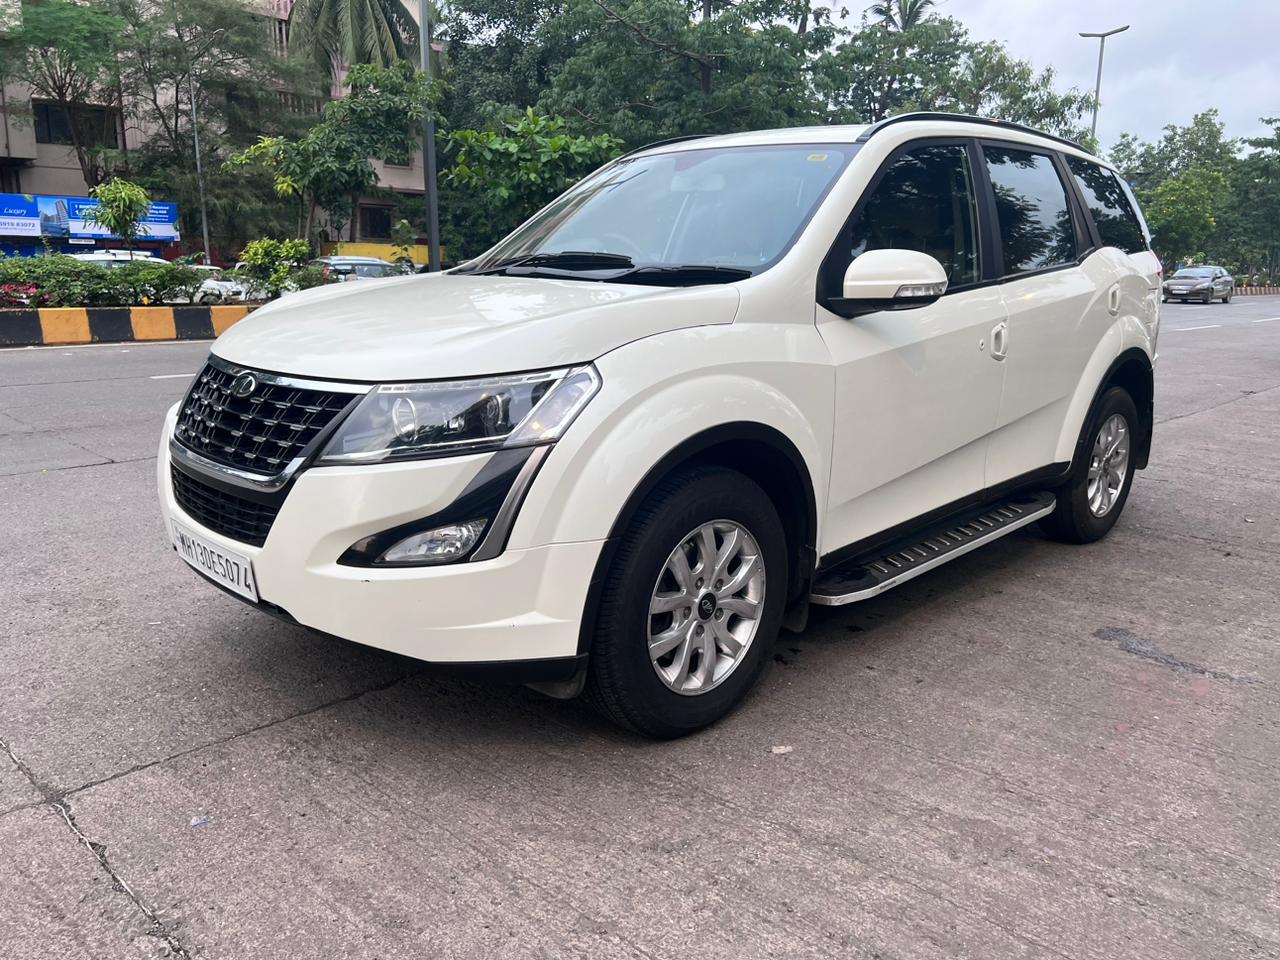 2019 Mahindra XUV500 W7 BS IV